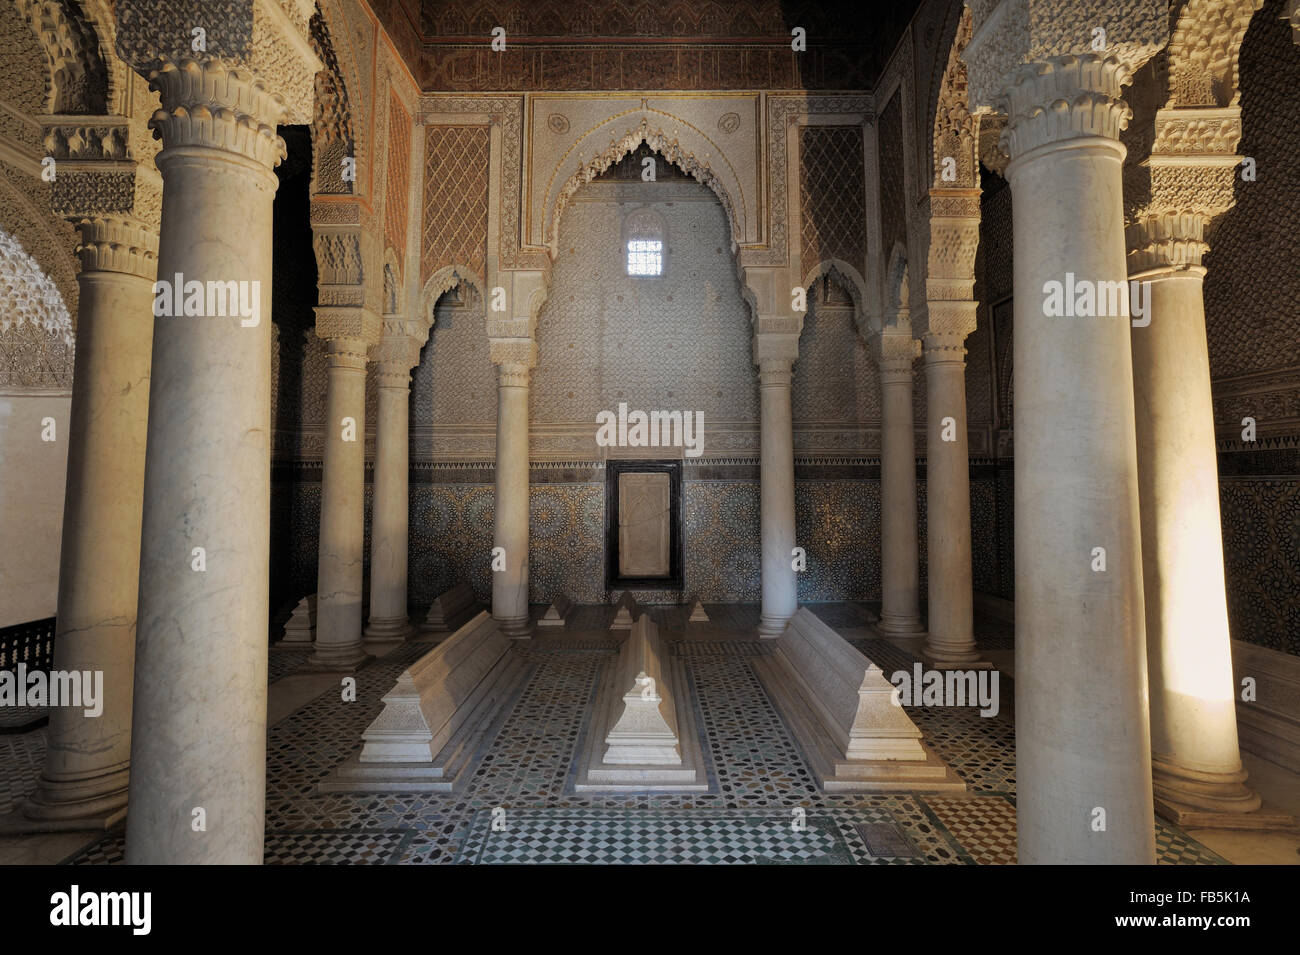 Hall de douze colonnes, Tombes Saadiennes (Tombeaux Saadiens), Marrakech, Maroc Banque D'Images